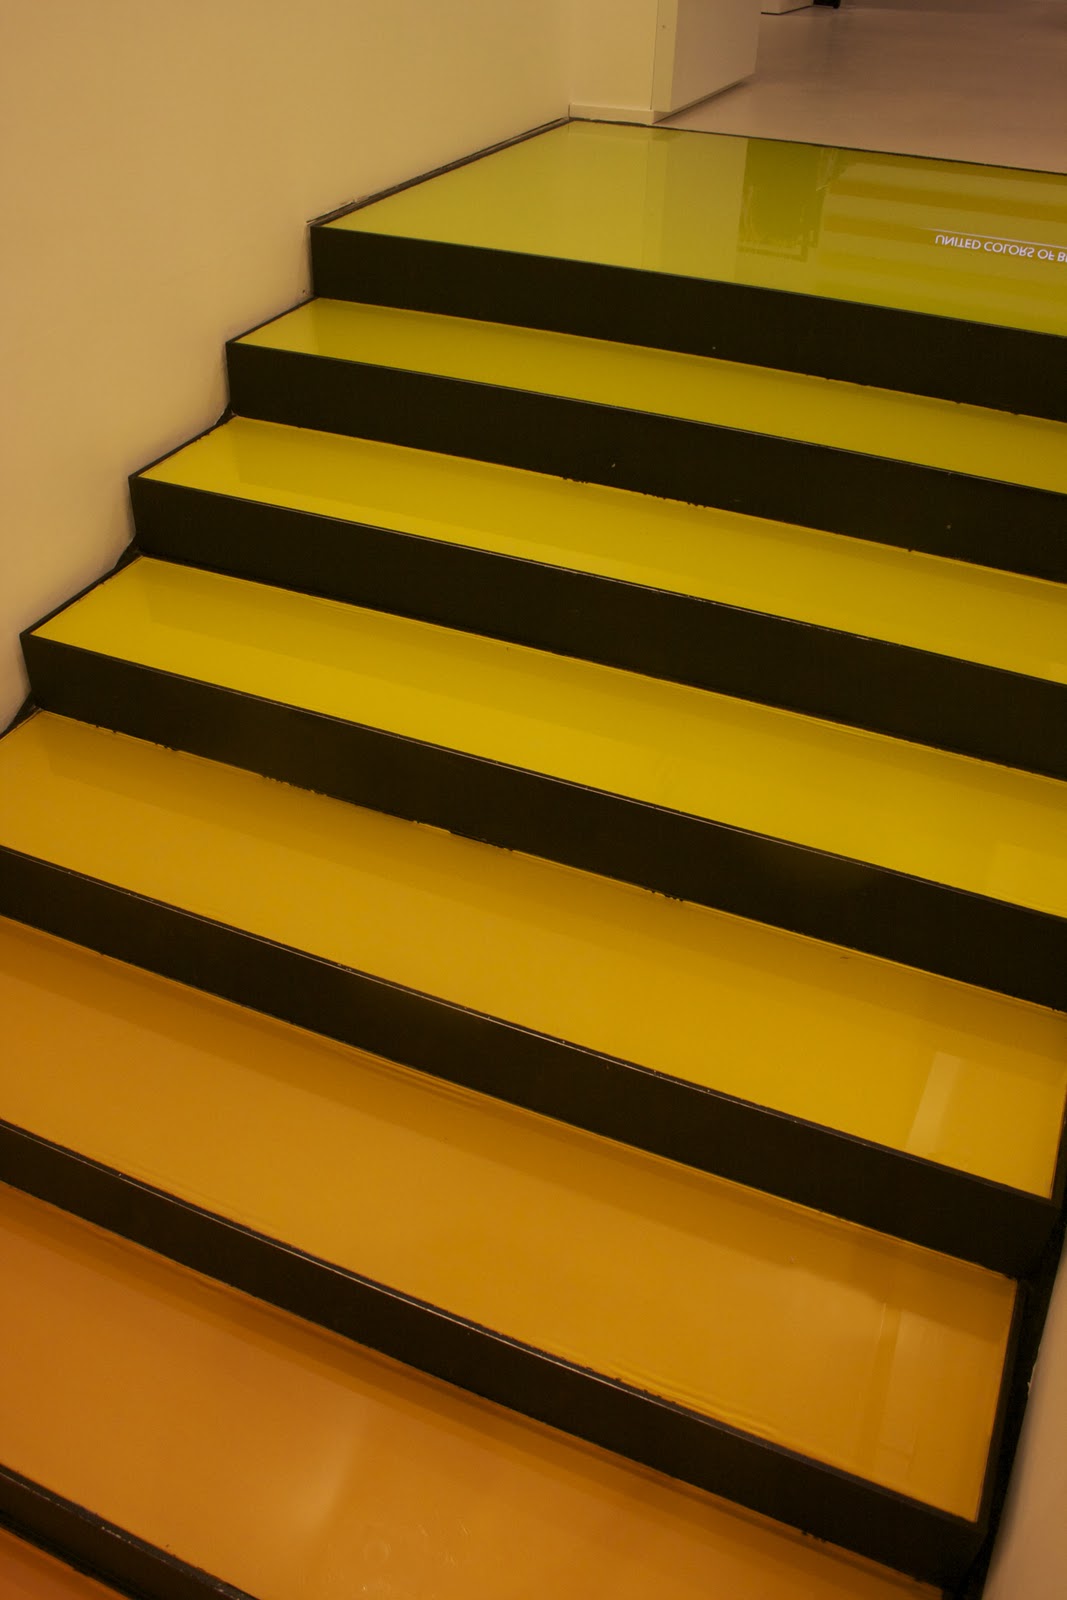 My 'Richard Curtis' London: Interiors Focus - Rainbow stairs at Benetton